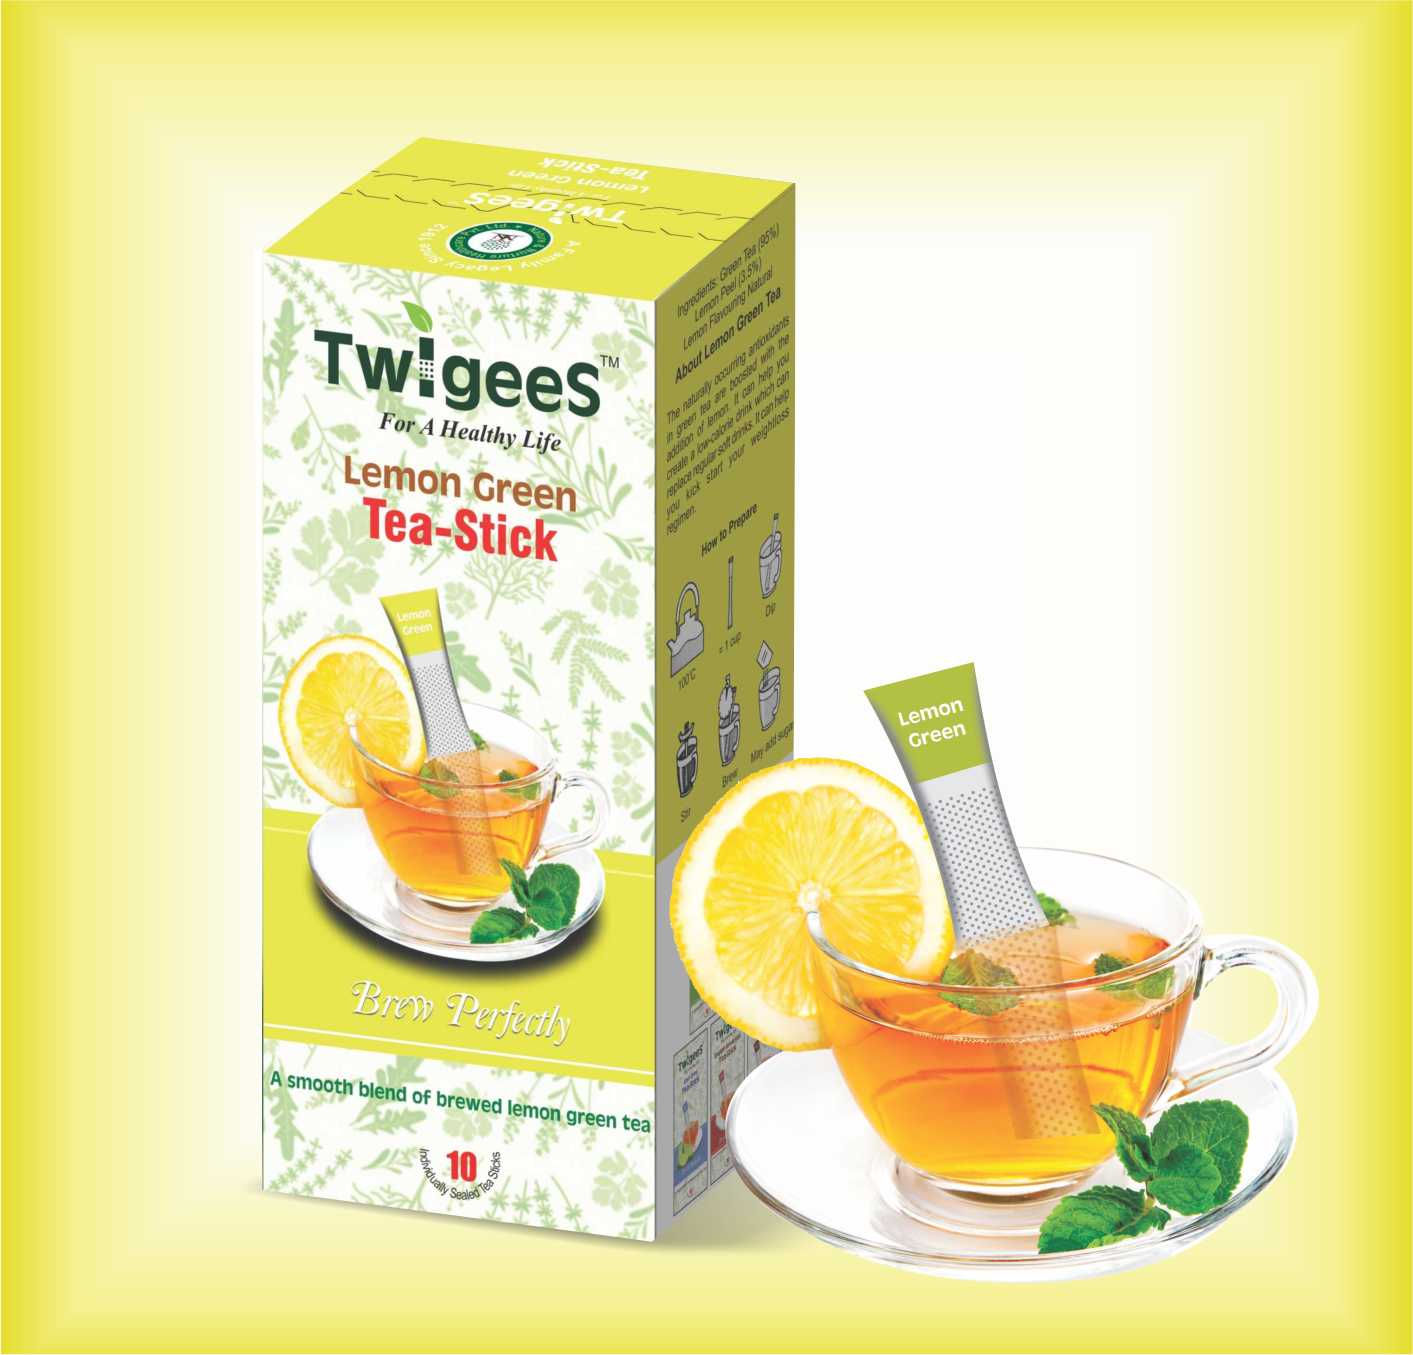 Twigees green tea - lemon